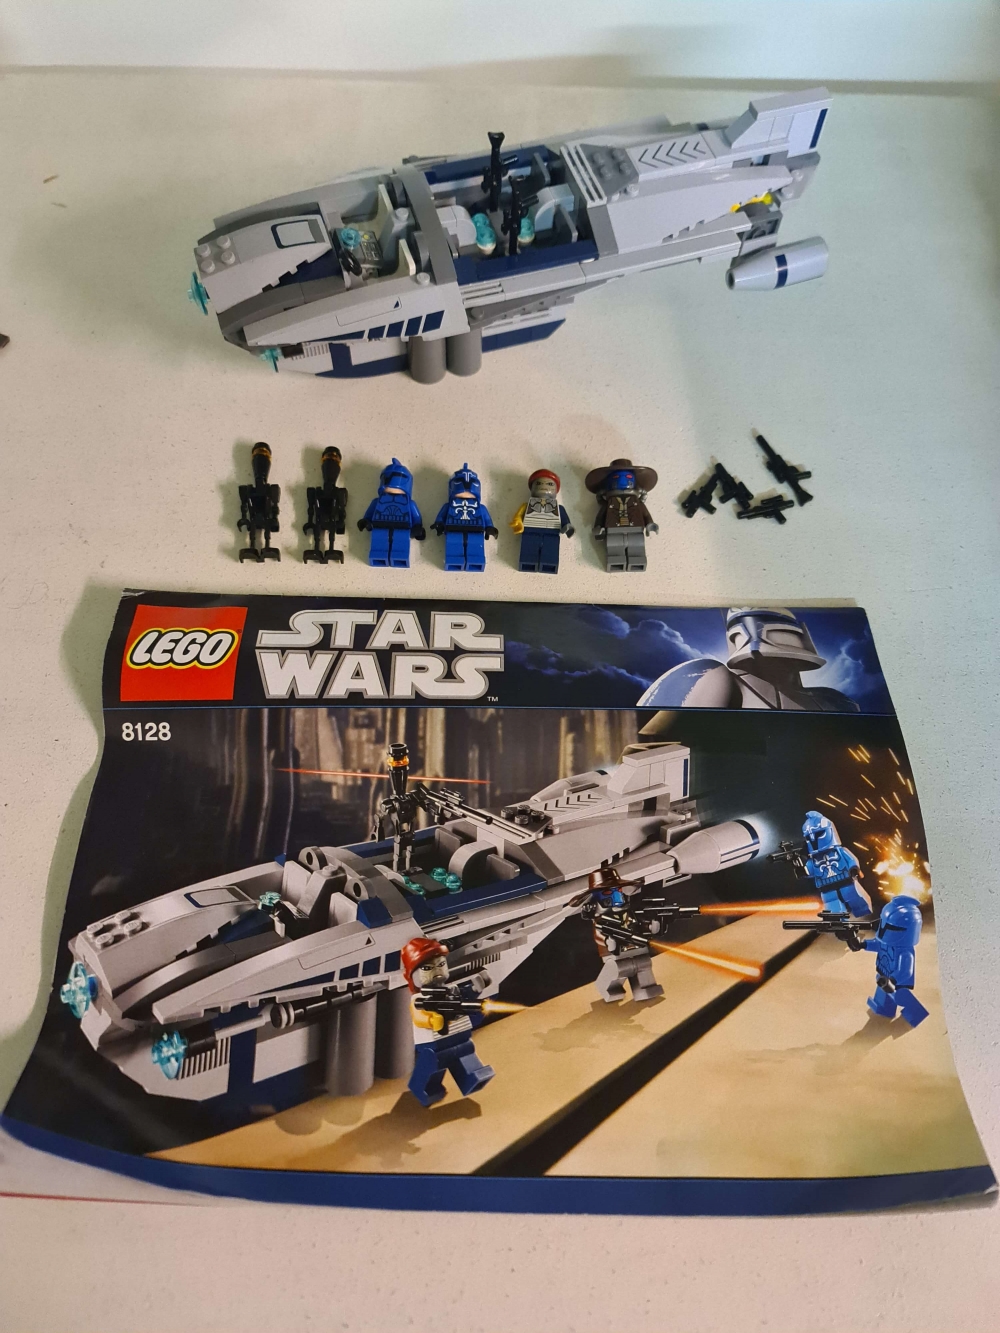 Sett 8128 fra Lego Star Wars: The Clone Wars serien. Meget pent. 

Komplett med manual. (Cad Bane mangler pustemaske på bildet men denne er med